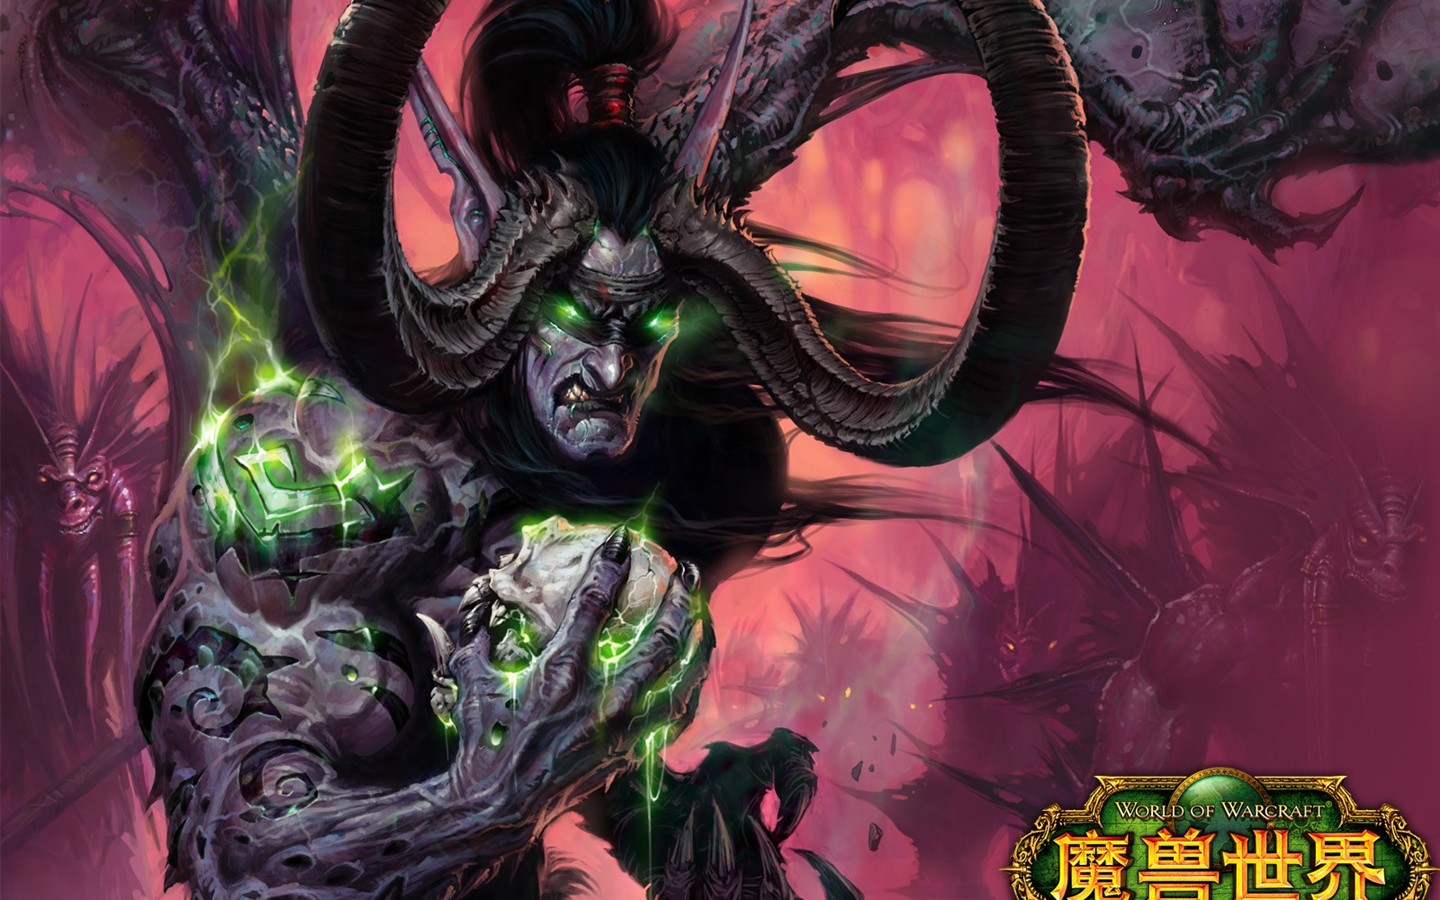 World of Warcraft: Fond d'écran officiel de Burning Crusade (2) #27 - 1440x900